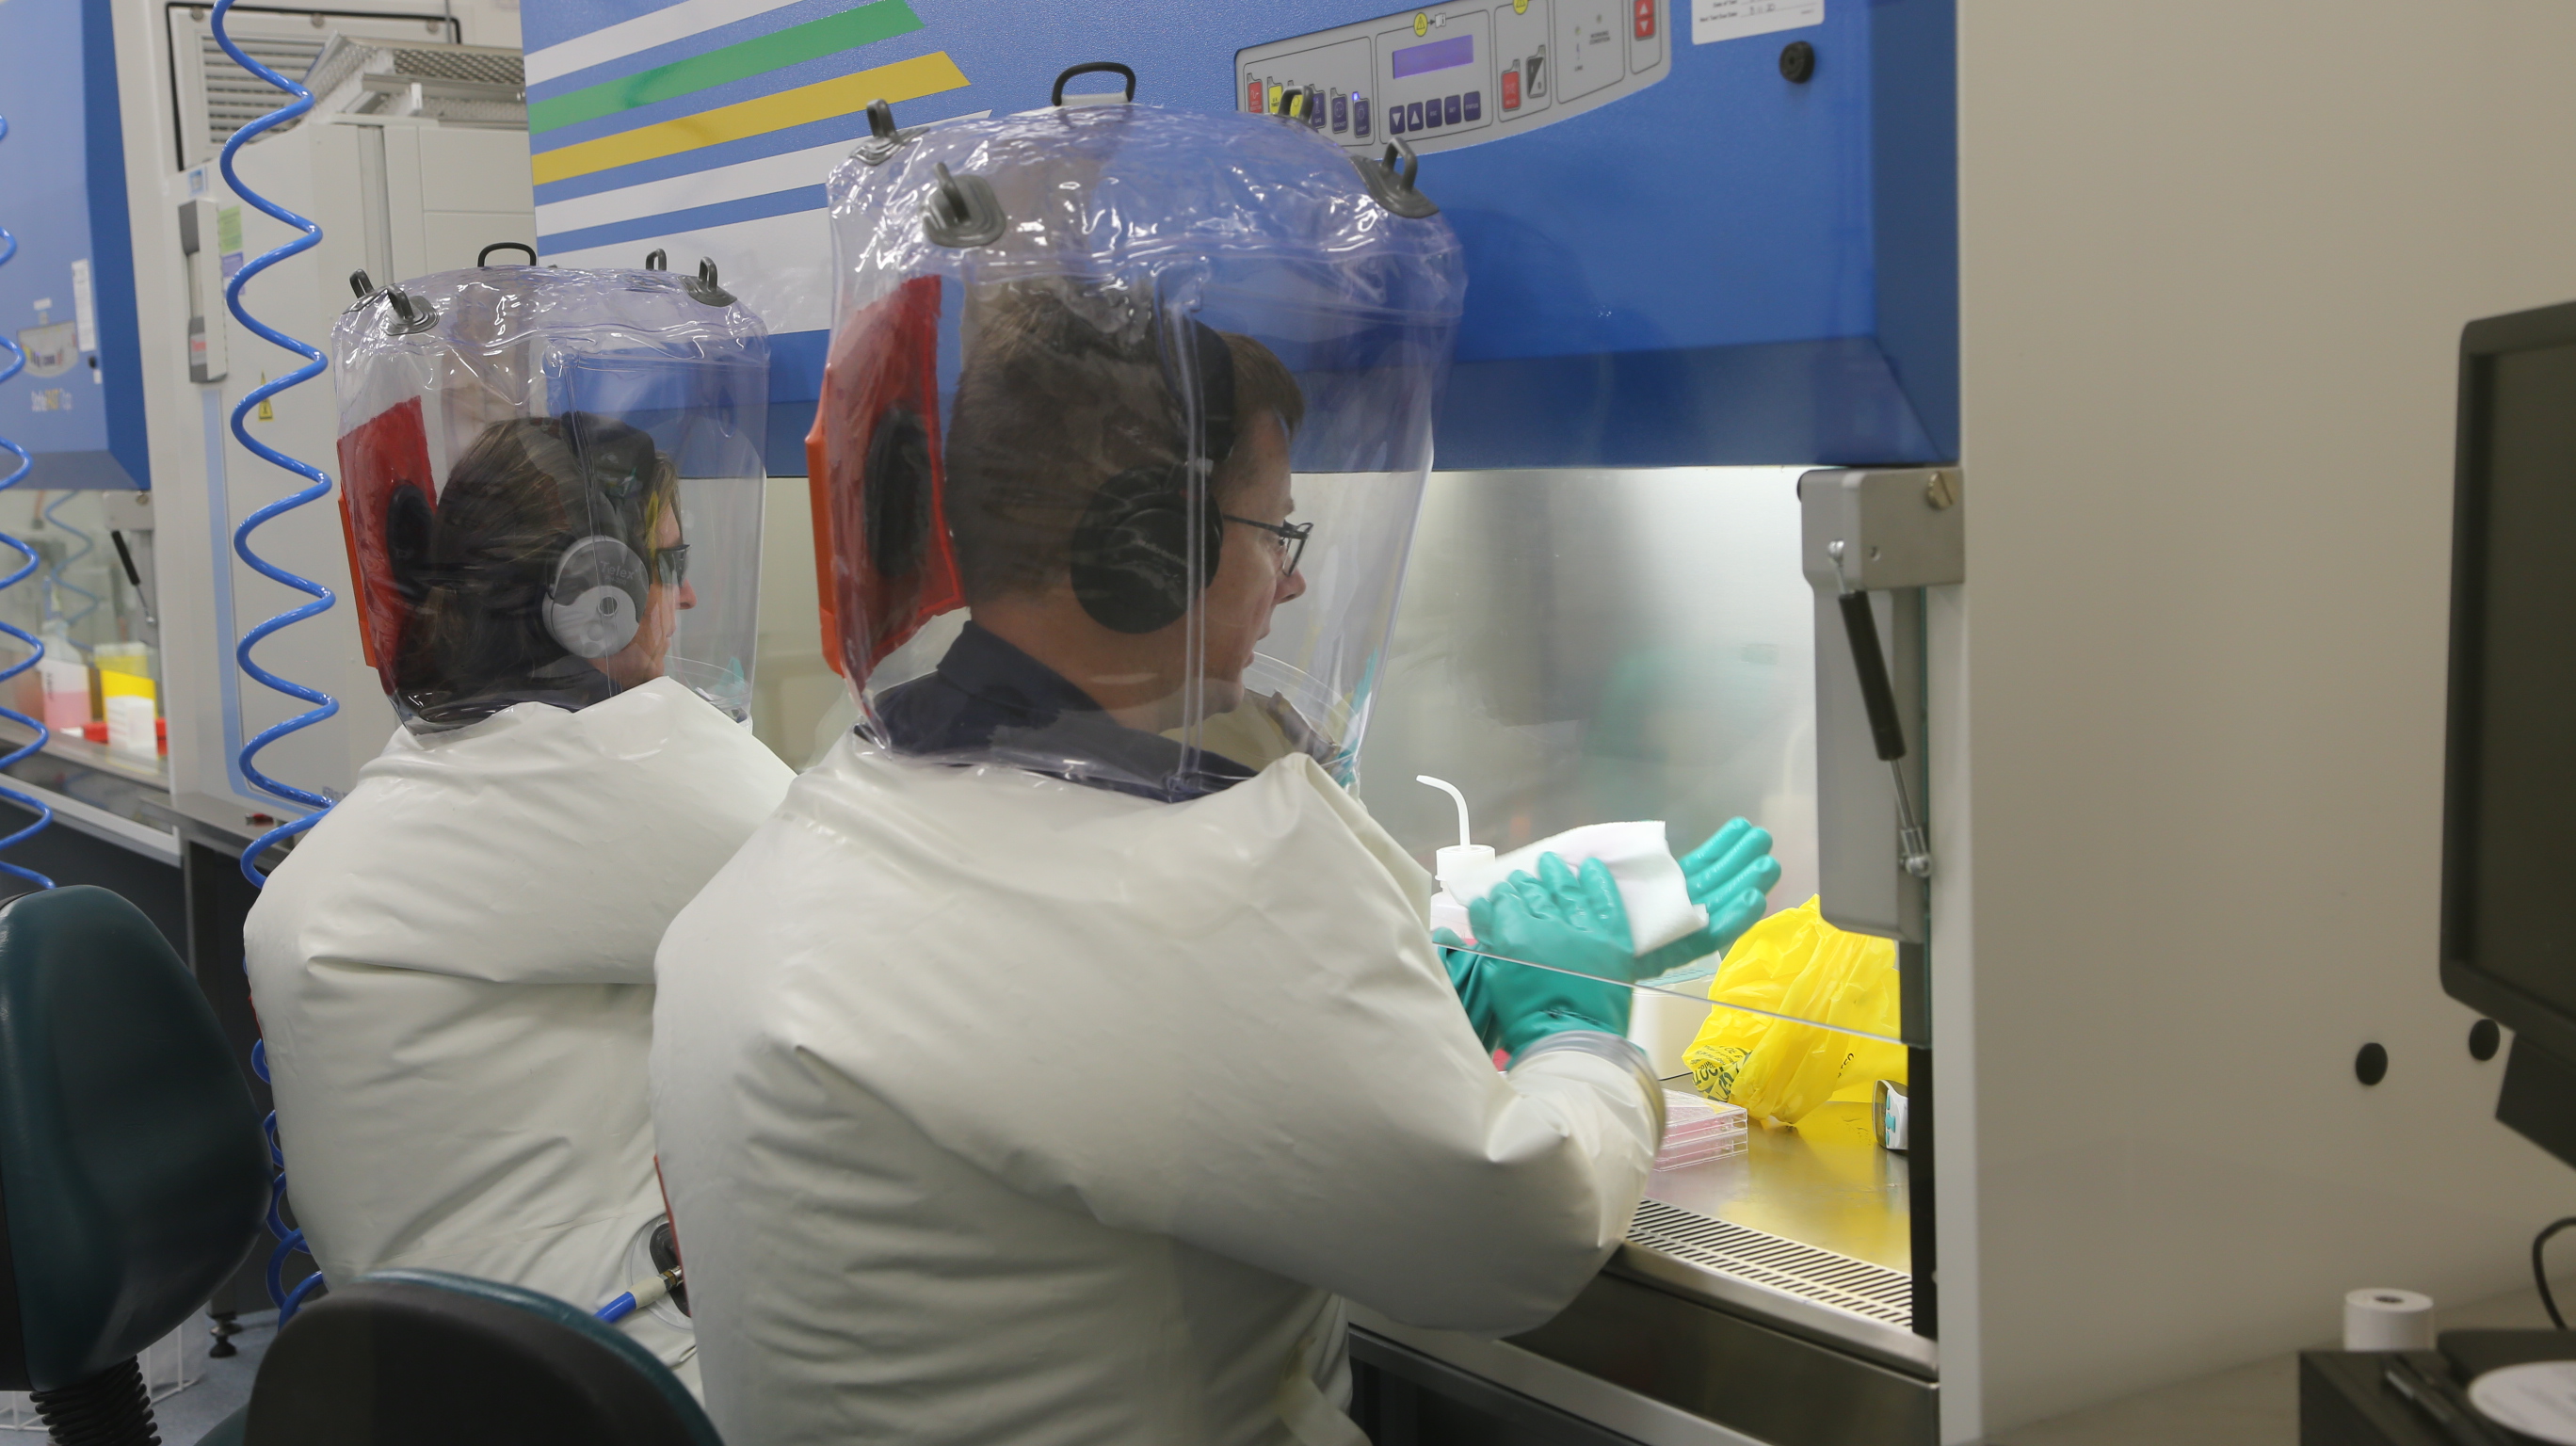 CSIRO scientists conducting research on the COVID-19 virus at the Australian Centre for Disease Preparedness.